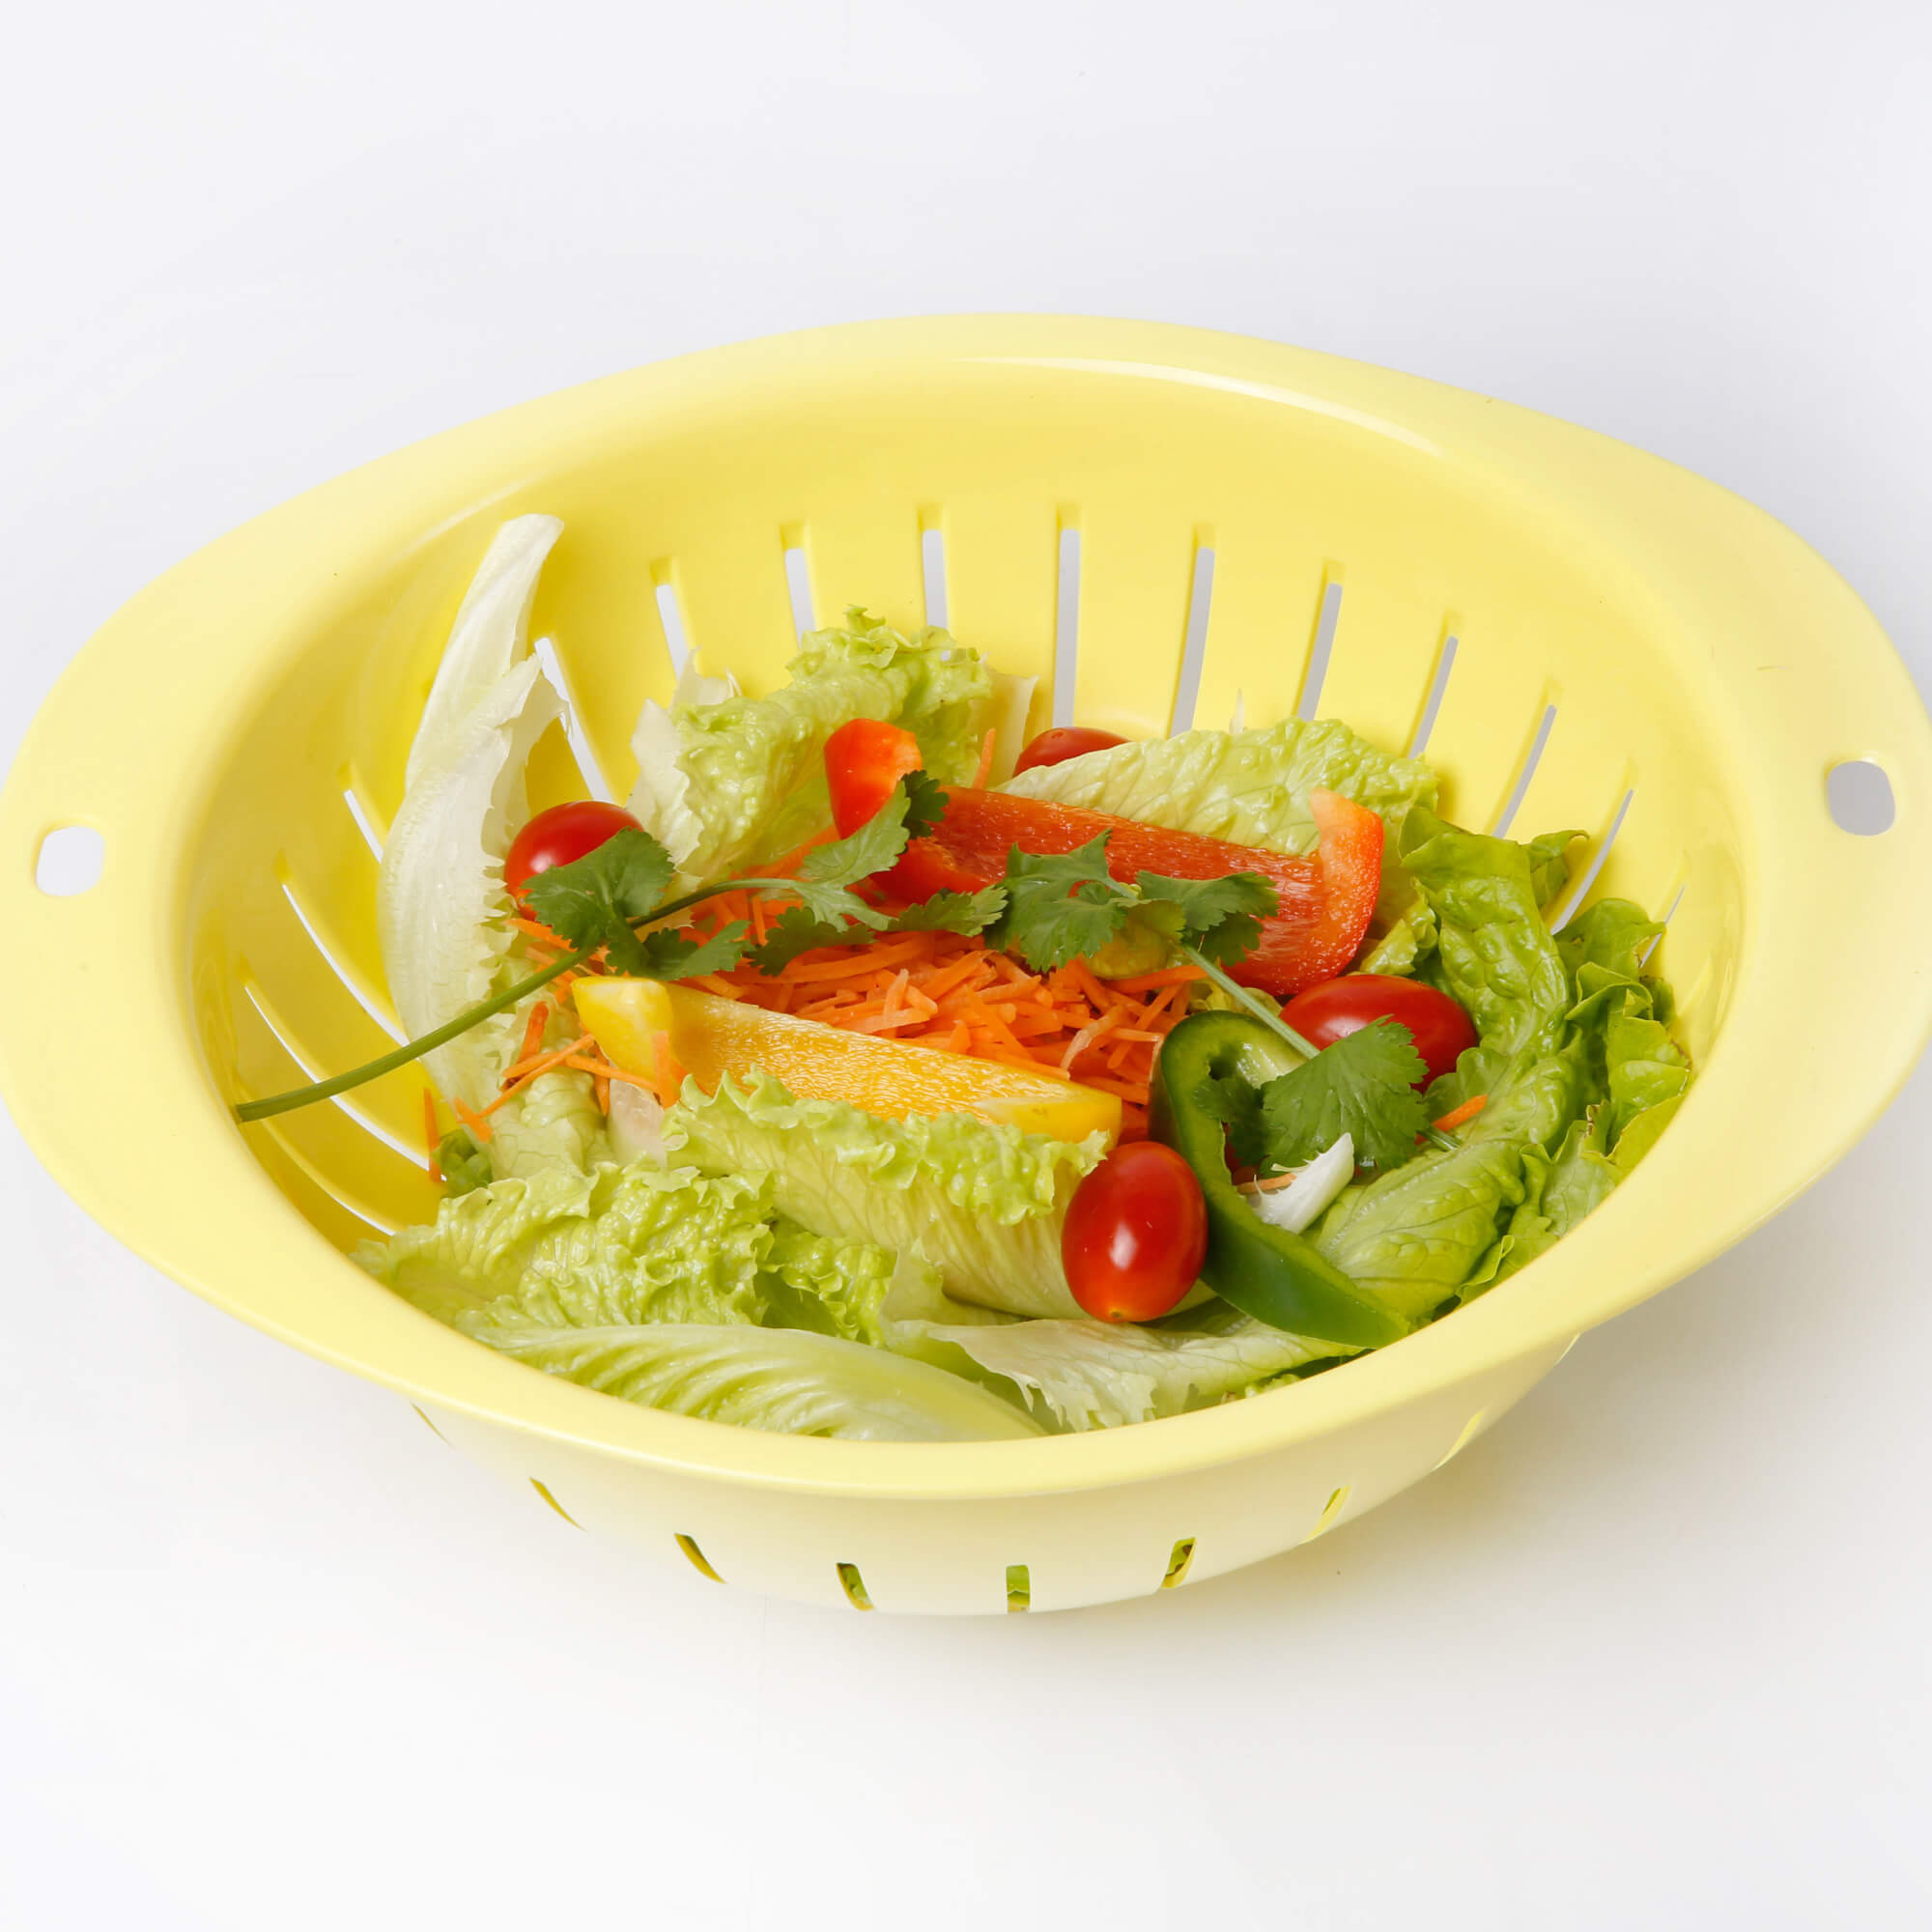 Vegetable and salad strainer